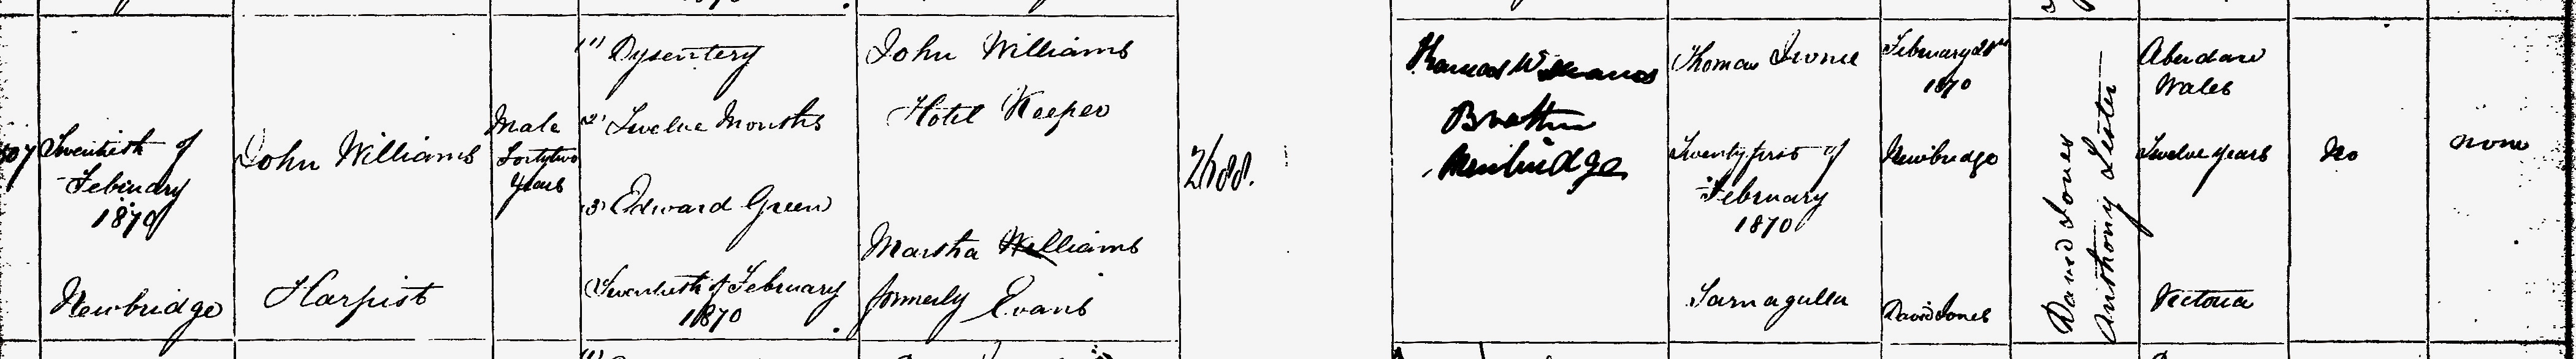 Death record, John Williams, 20 February 1870